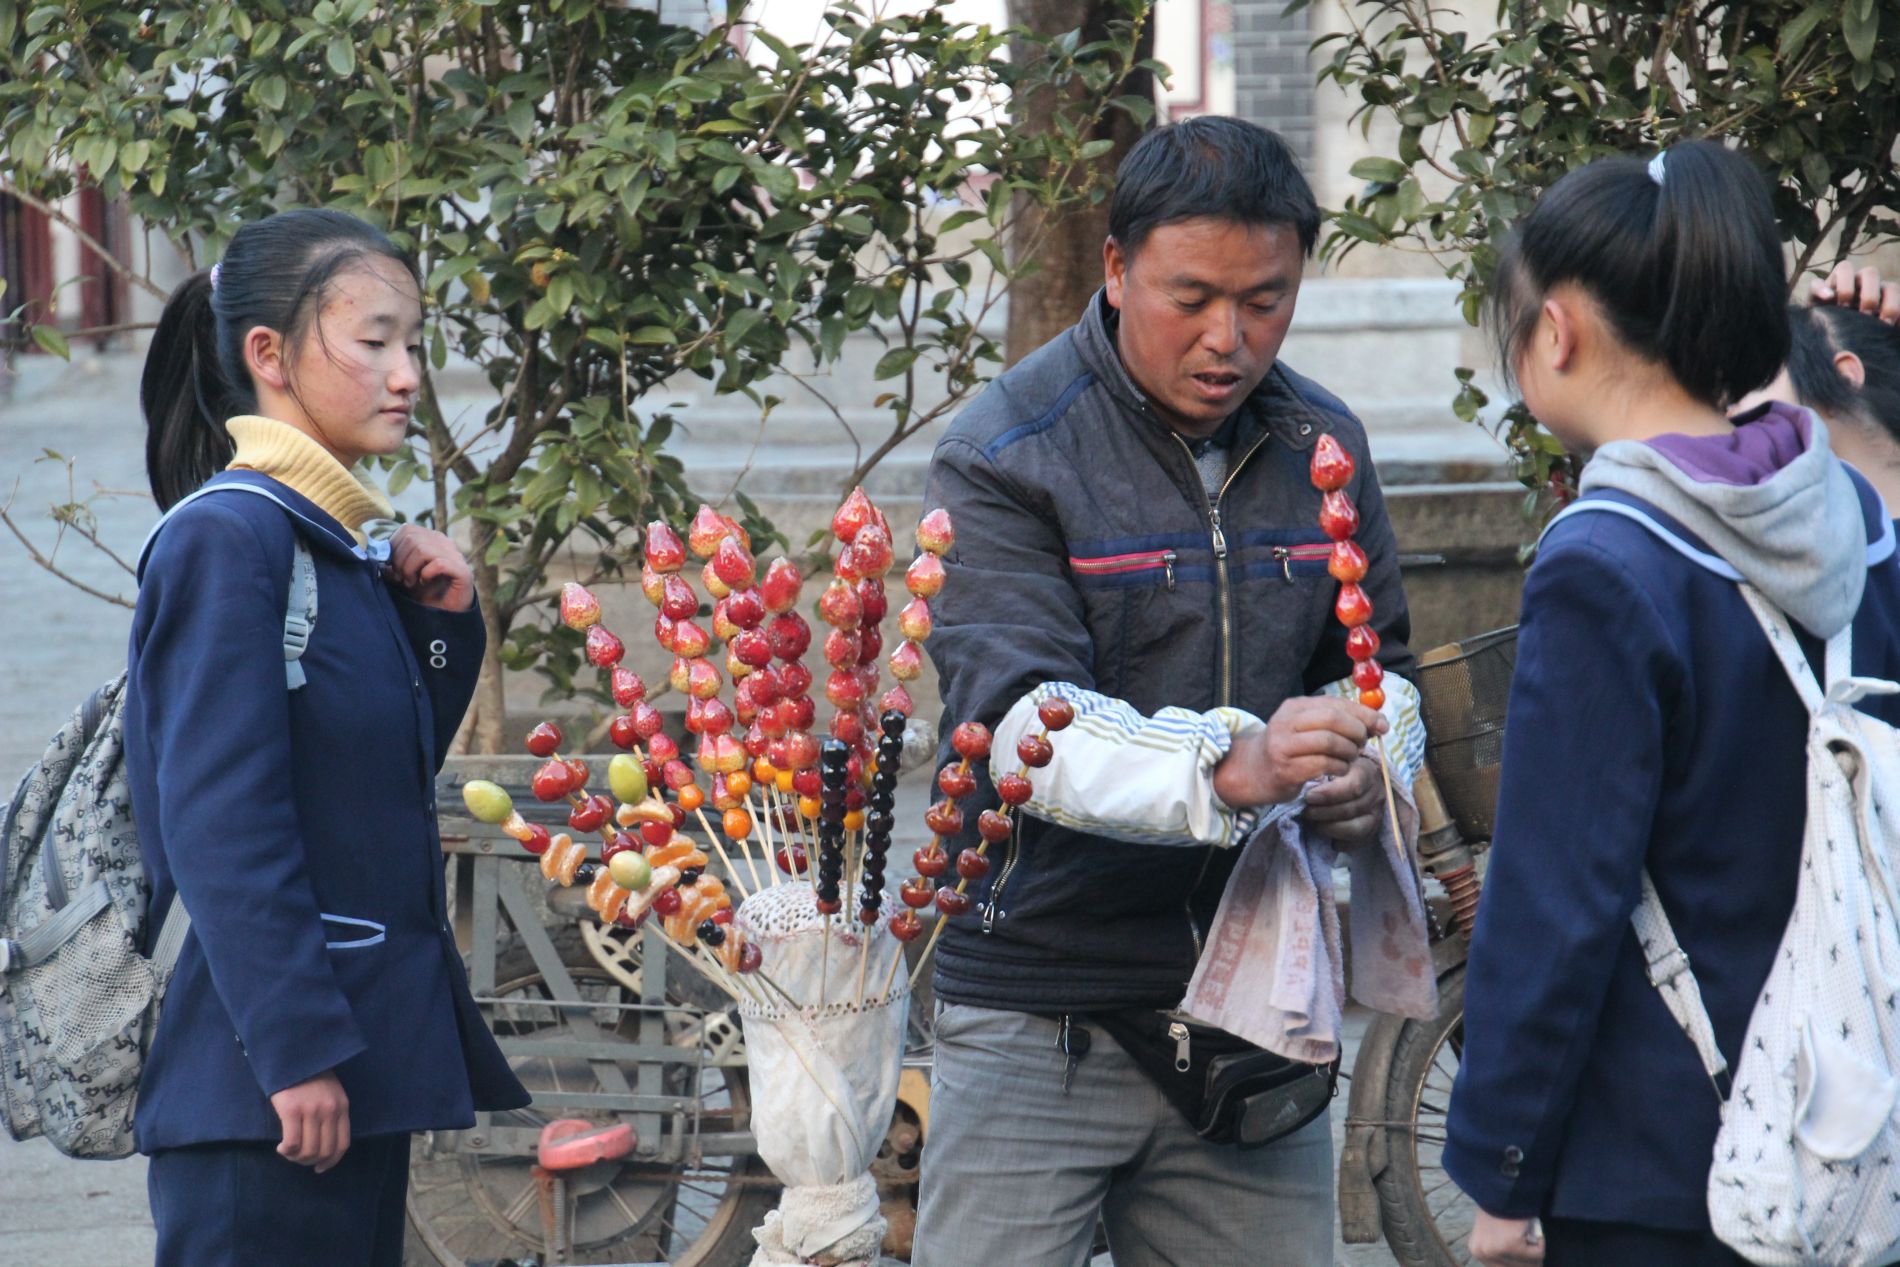 A man sells sugar-covered strawberries in DàlÇ??, China.